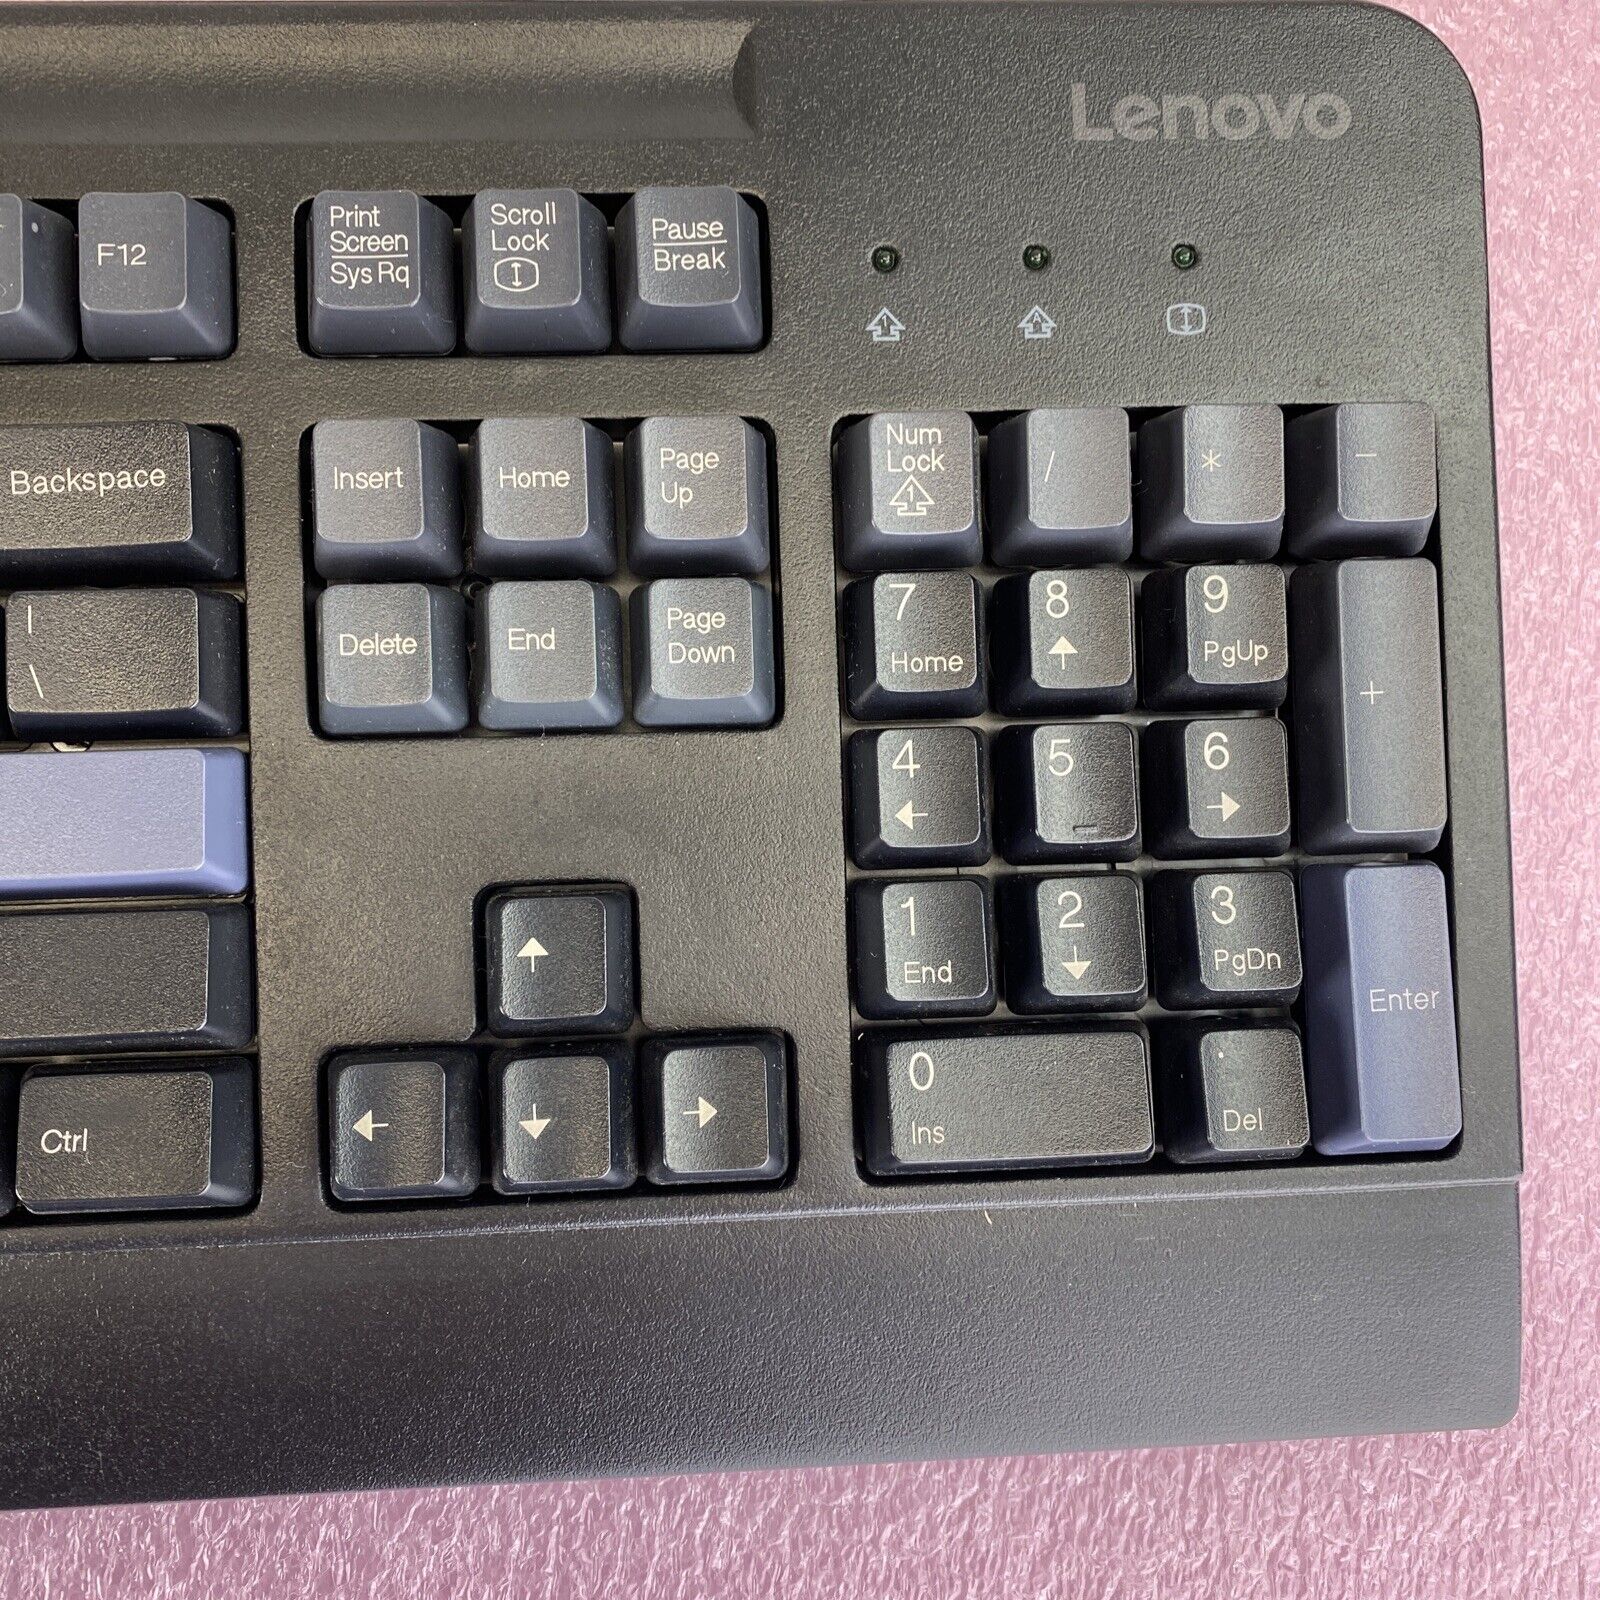 Lenovo SK-8825 Standard Keyboard USB wired Black tall quiet keys with pen holder